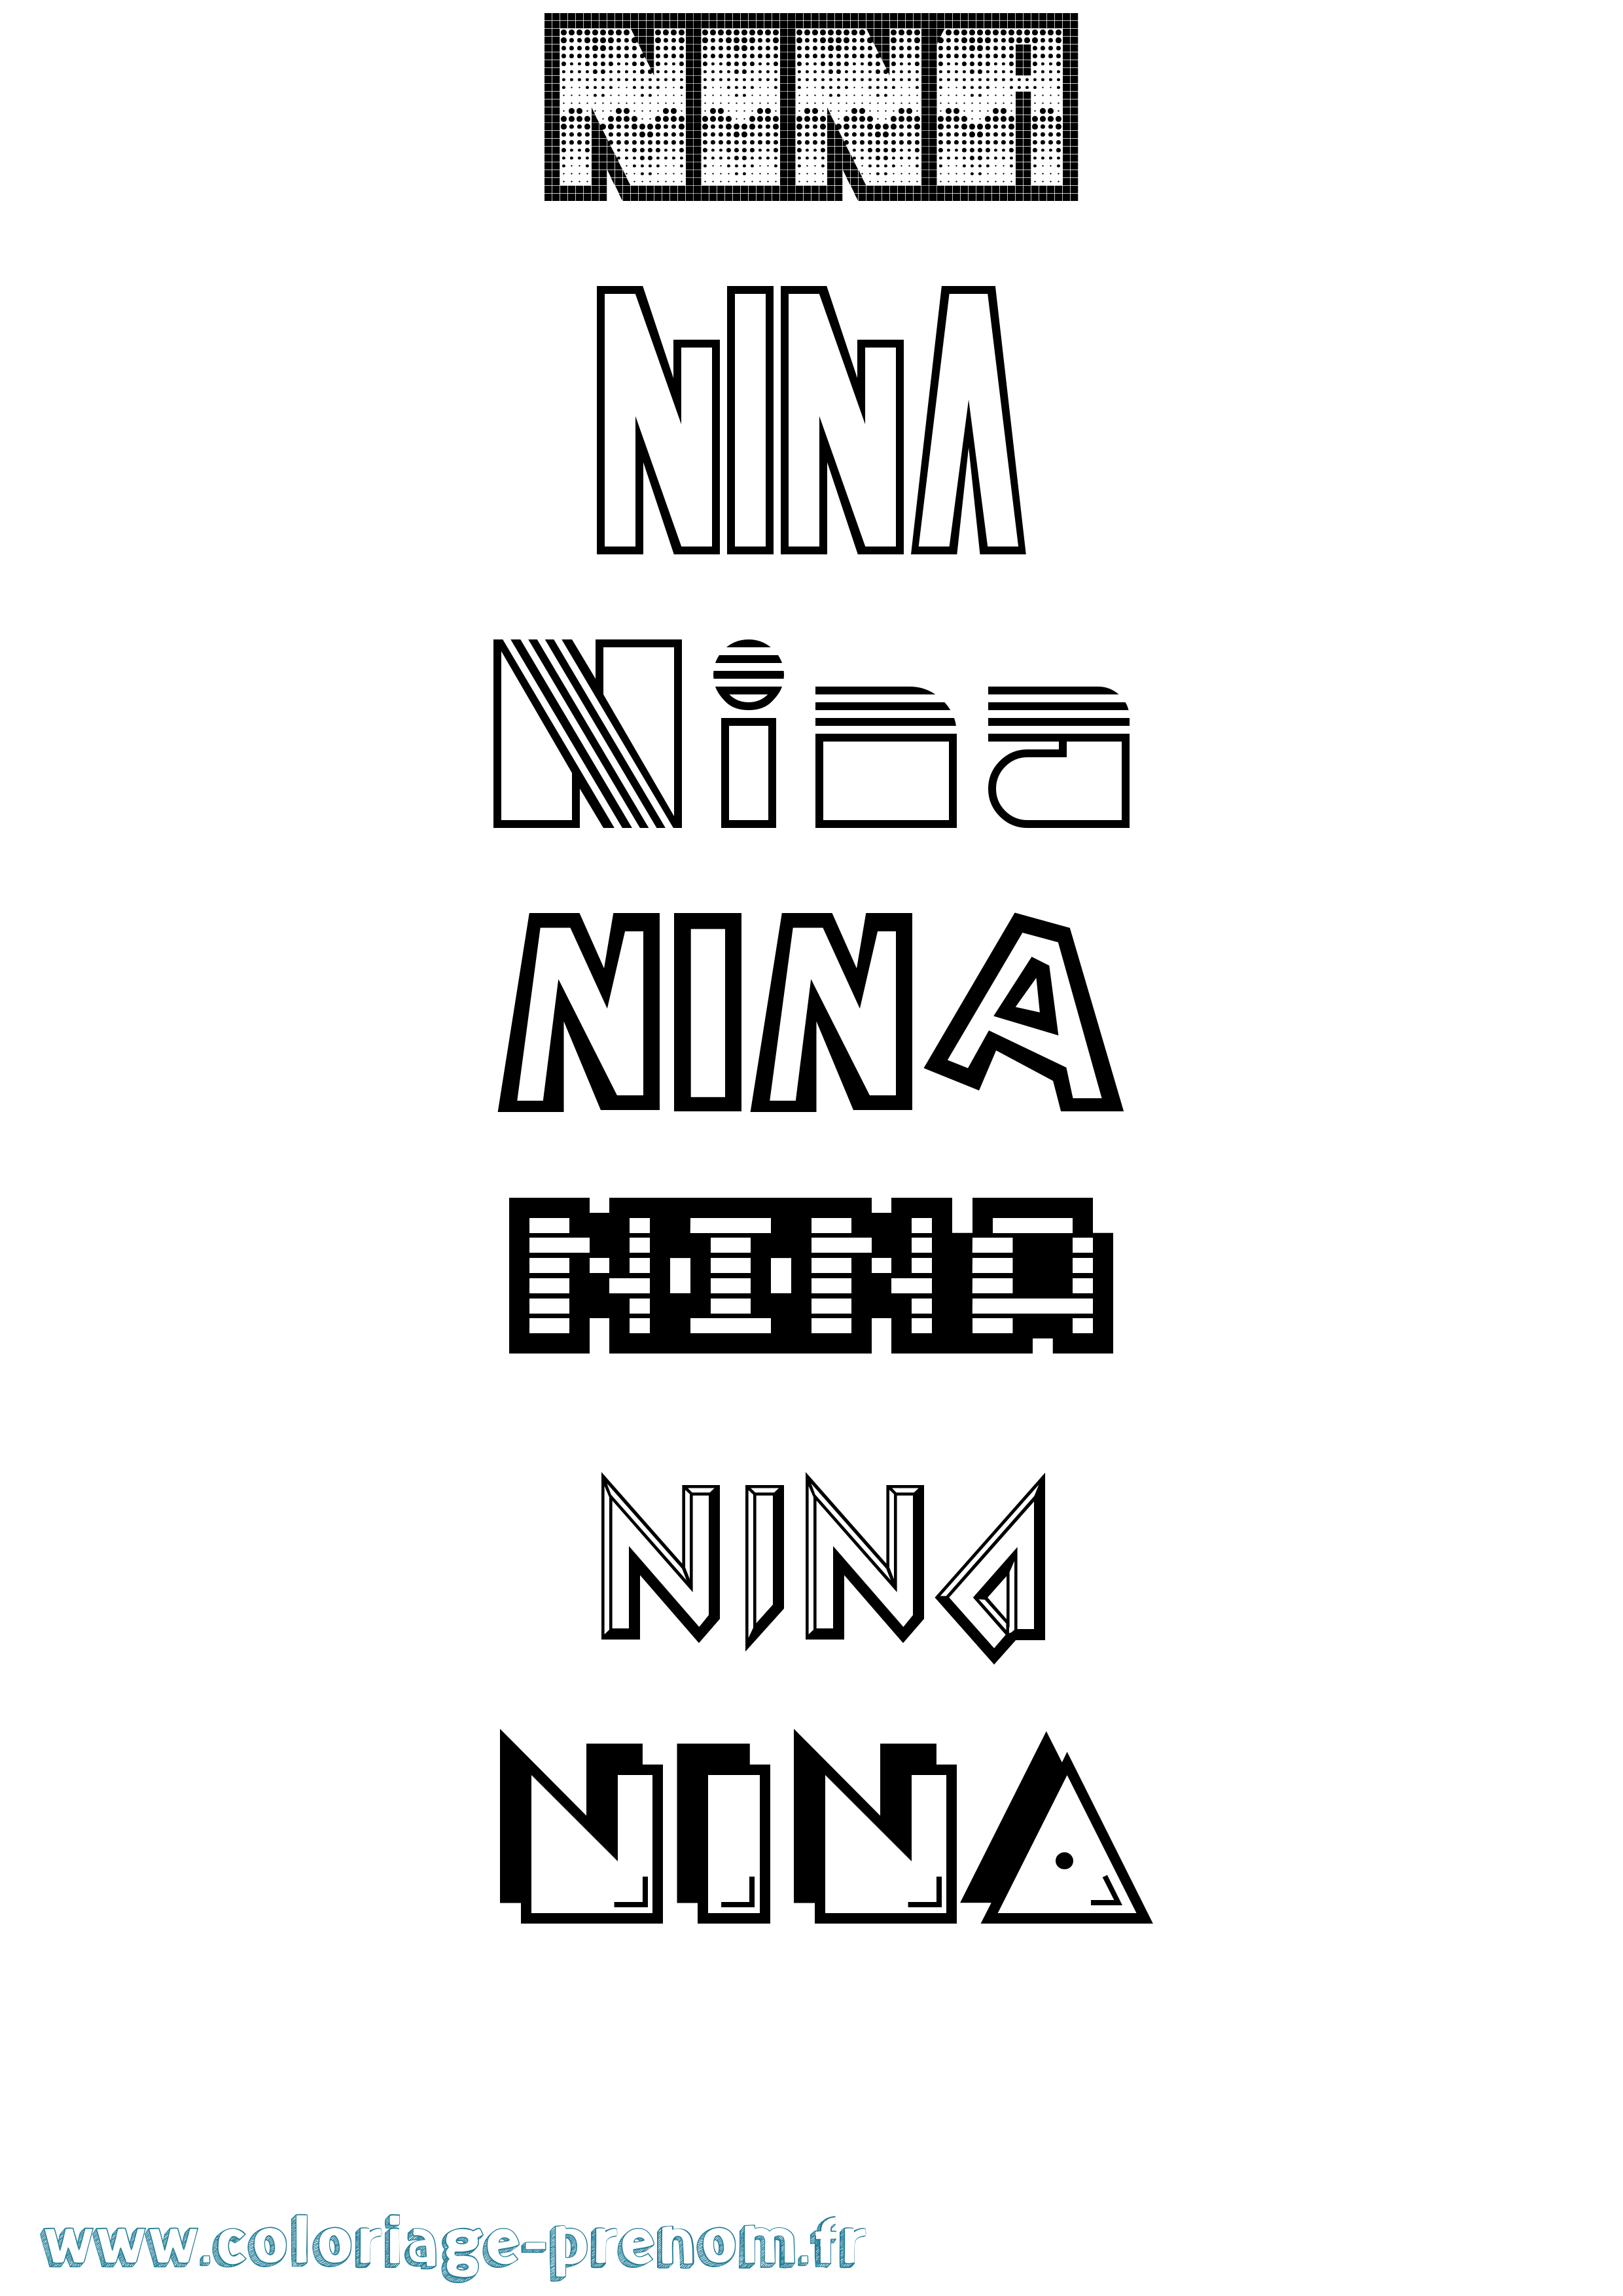 Coloriage prénom Nina